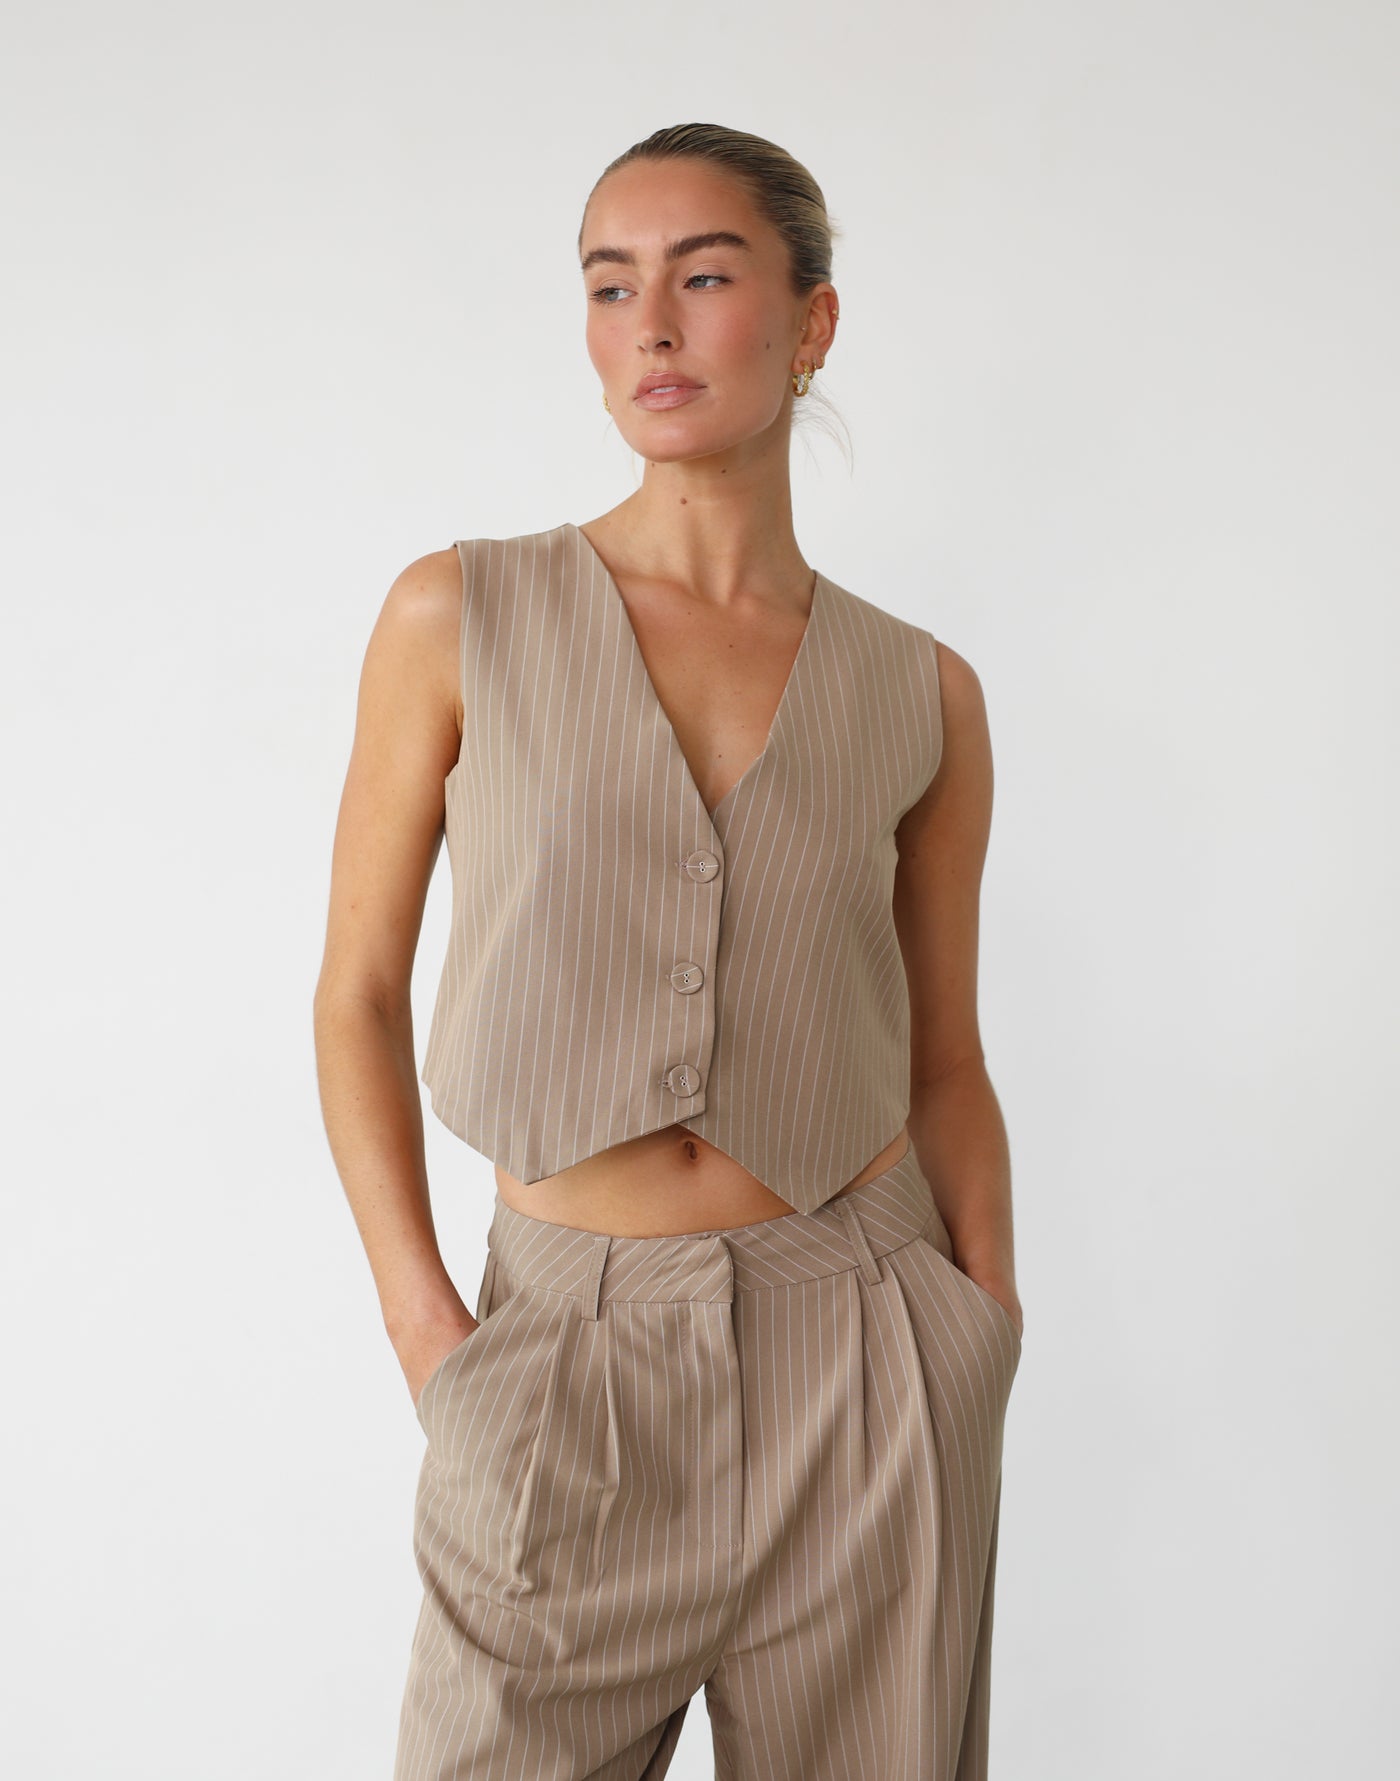 Tiffanie Vest (Beige Pinstripe) - Beige Pinstripe Vest - Women's Top - Charcoal Clothing